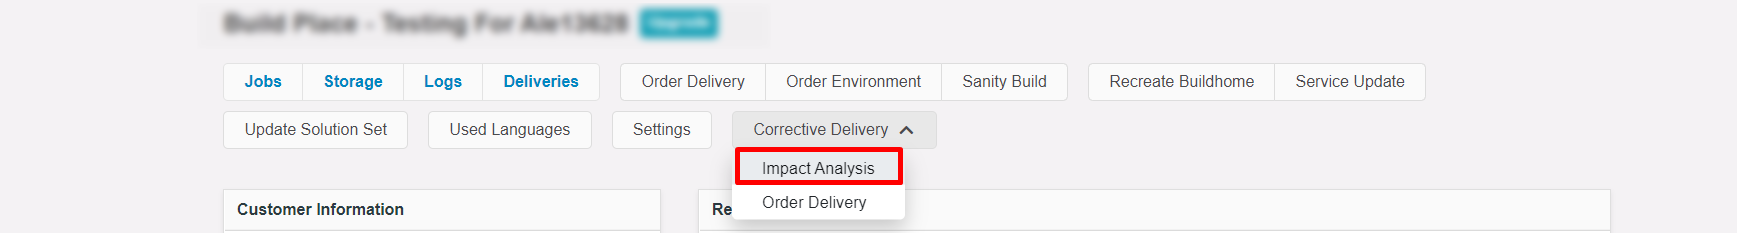 impact-analysis-option